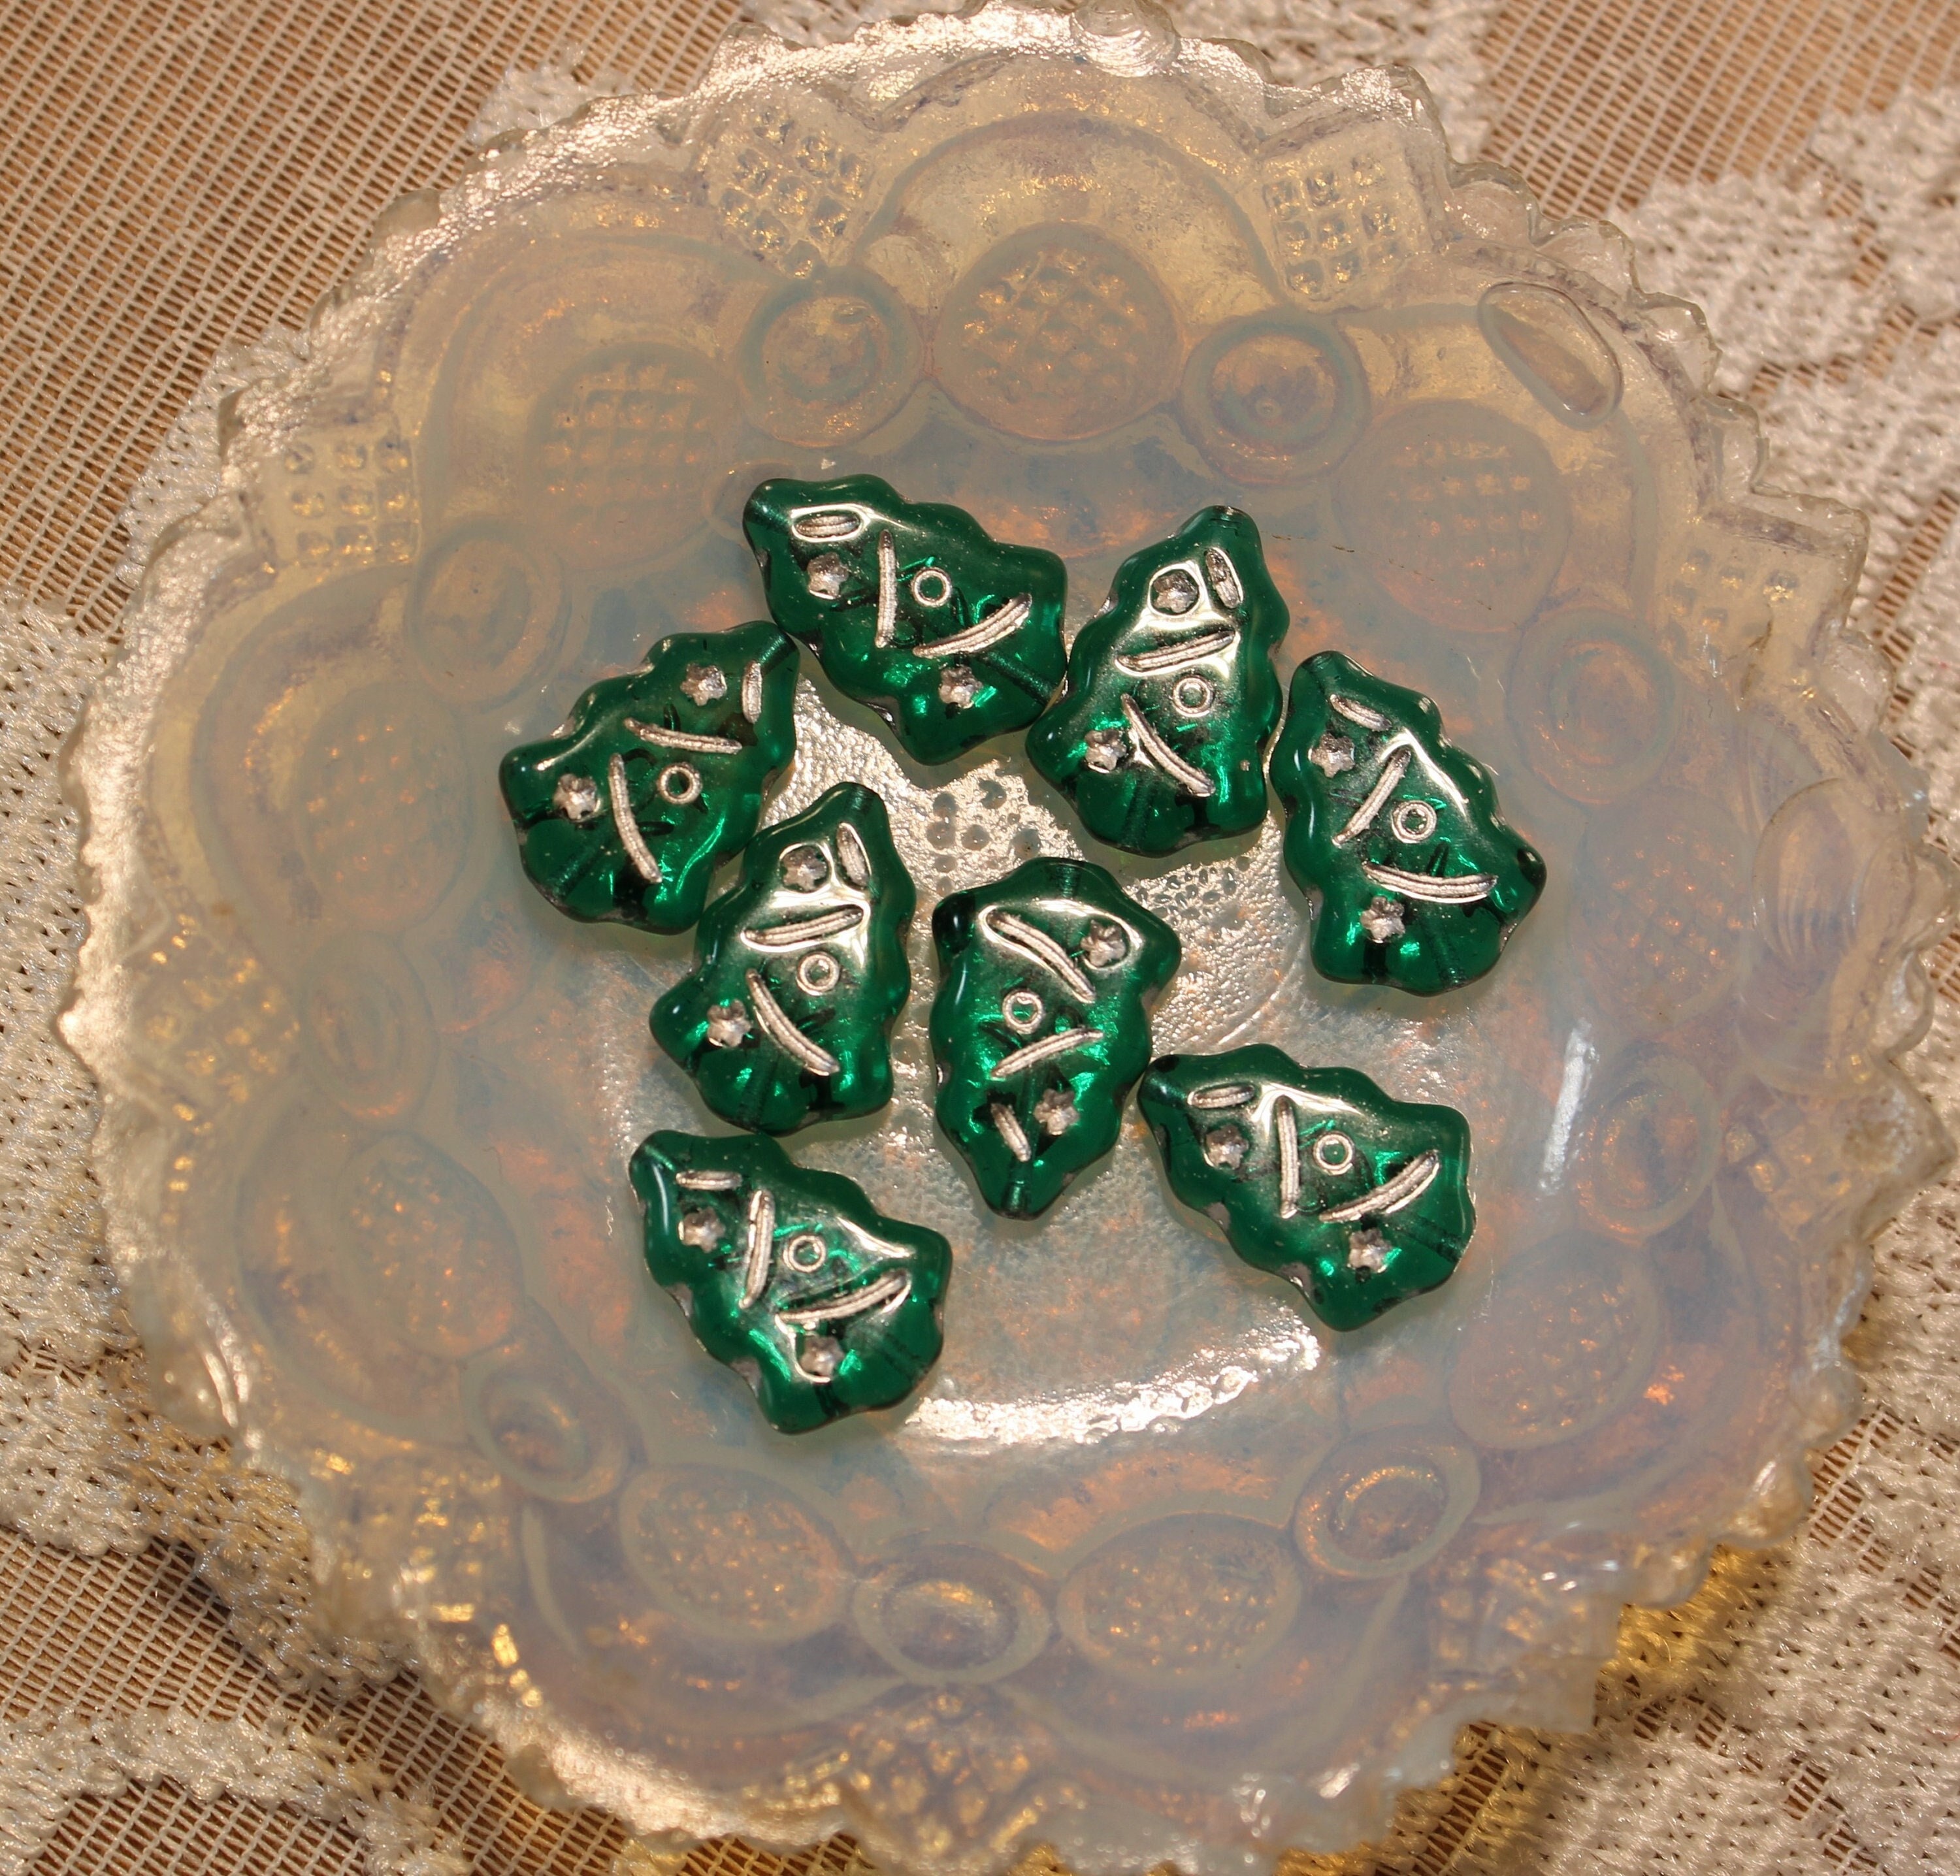 Czech glass Christmas tree beads 10pc mint green AB 17x12mm UV